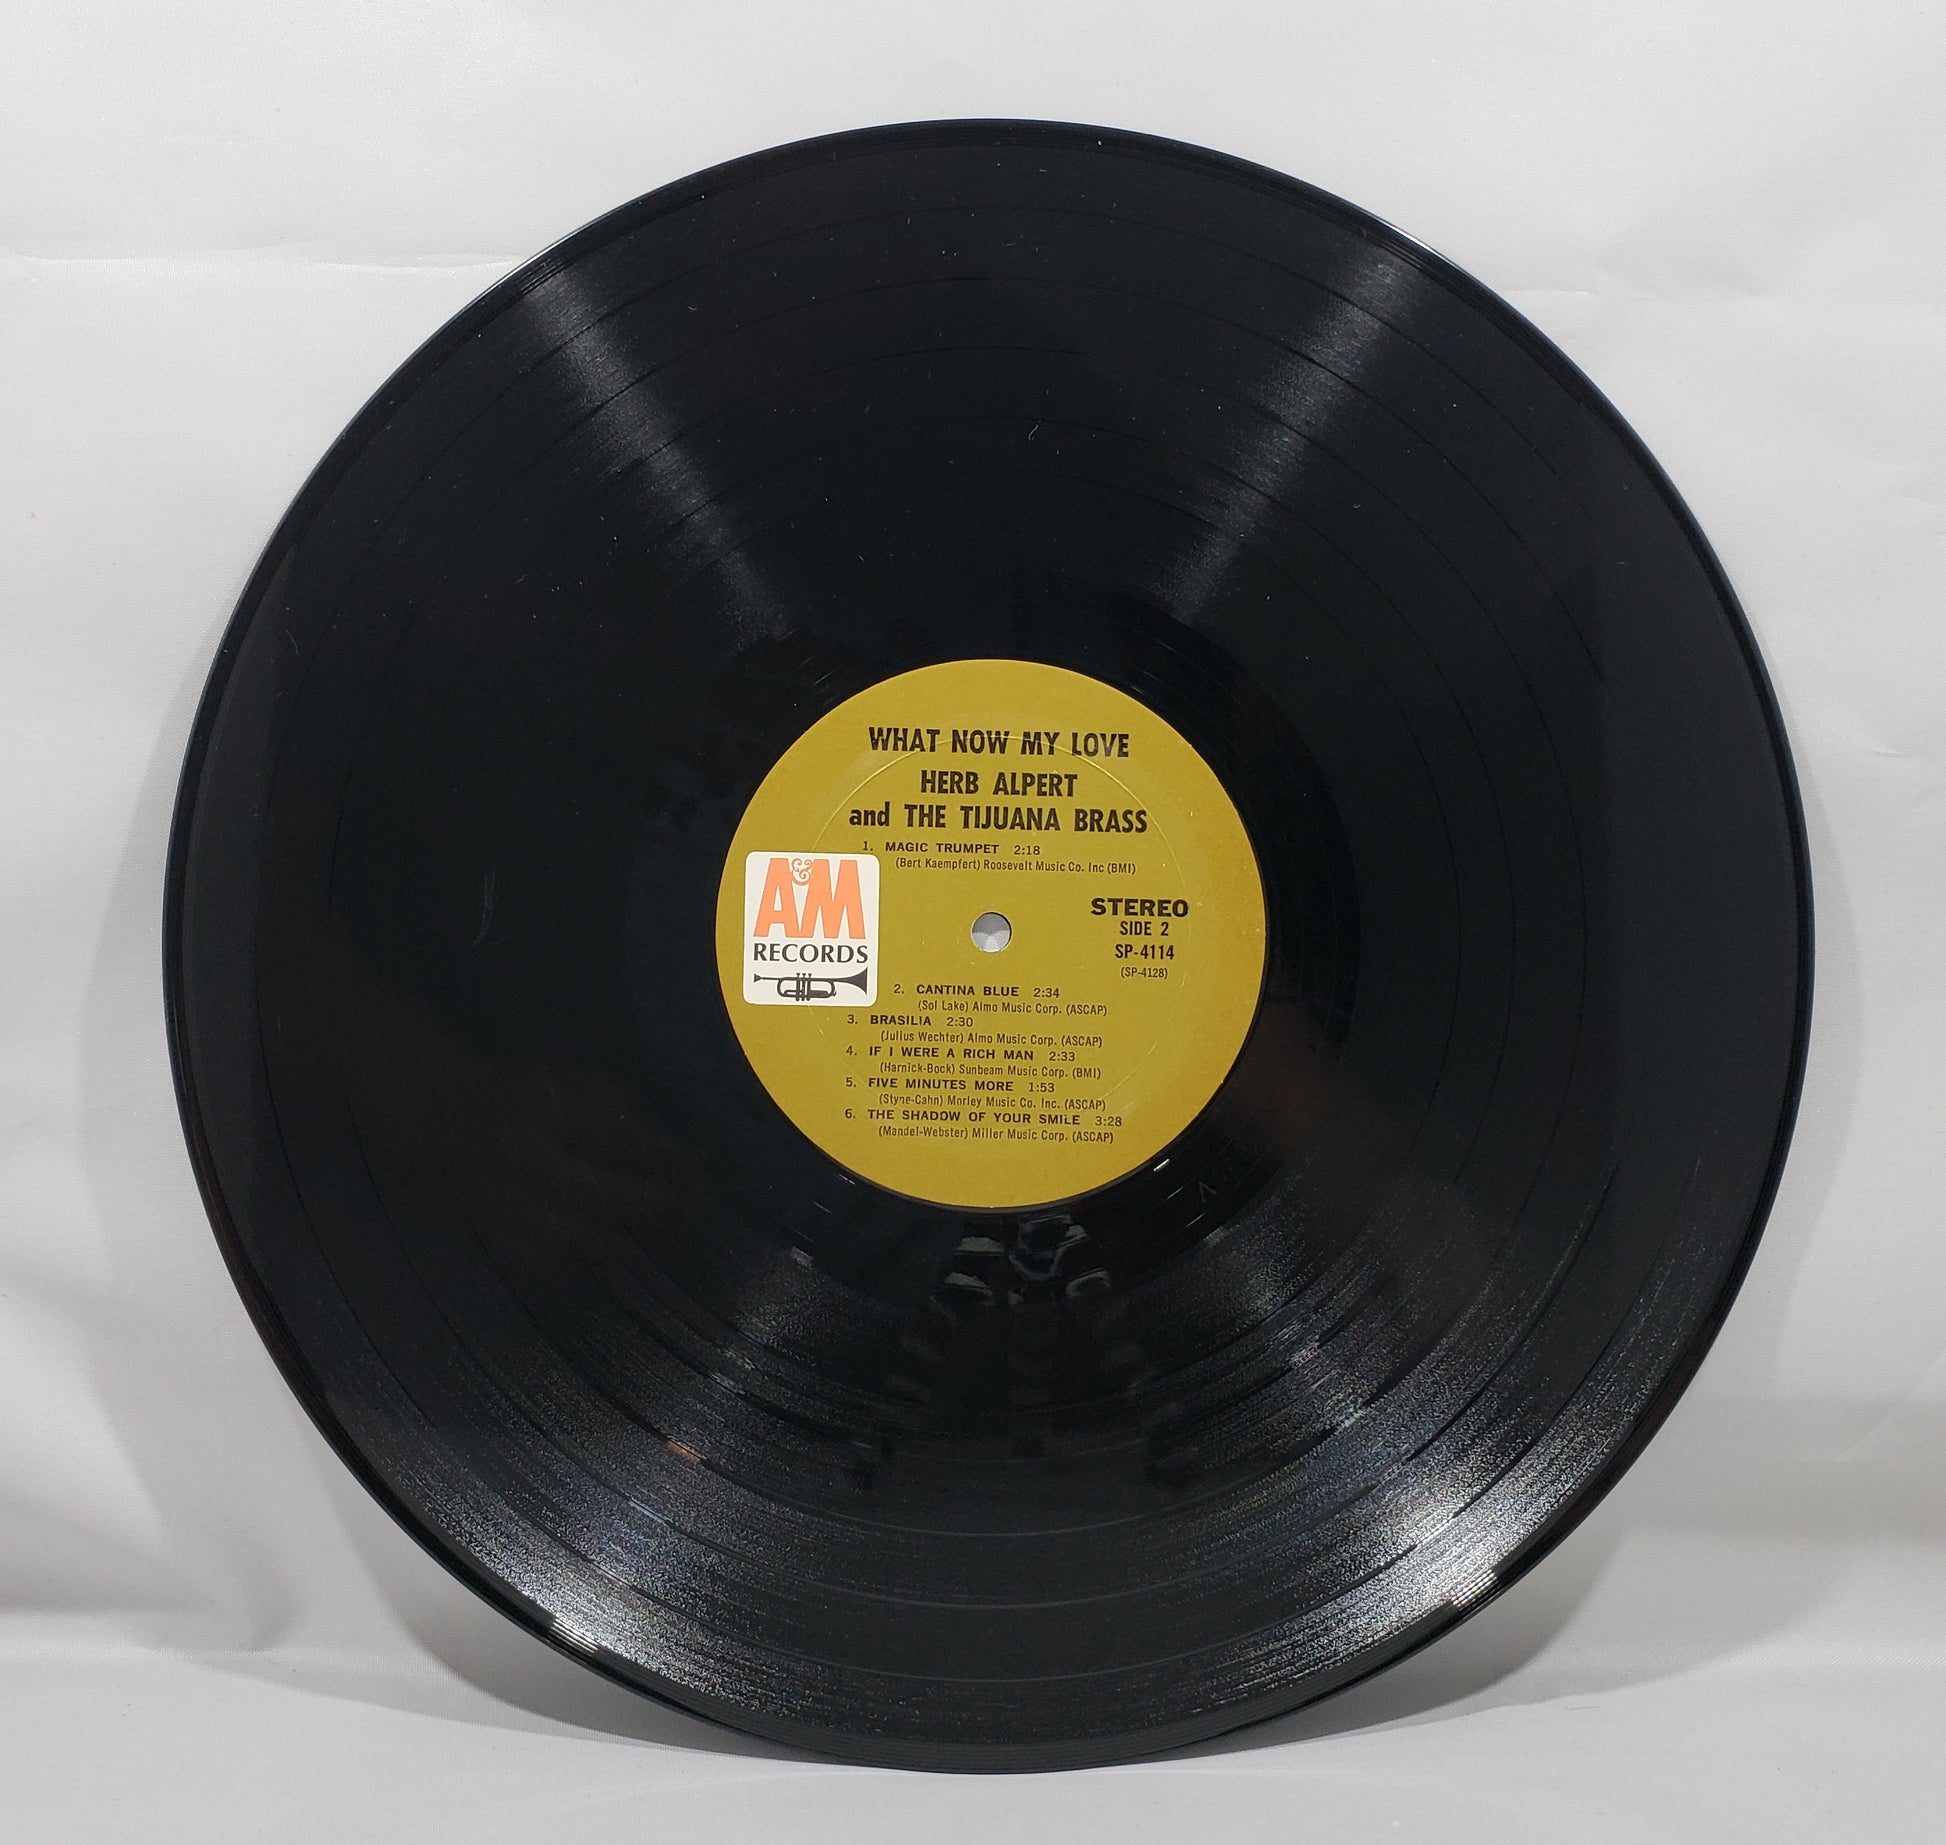 Herb Alpert & The Tijuana Brass - What Now My Love [1966 Used Vinyl Record LP]